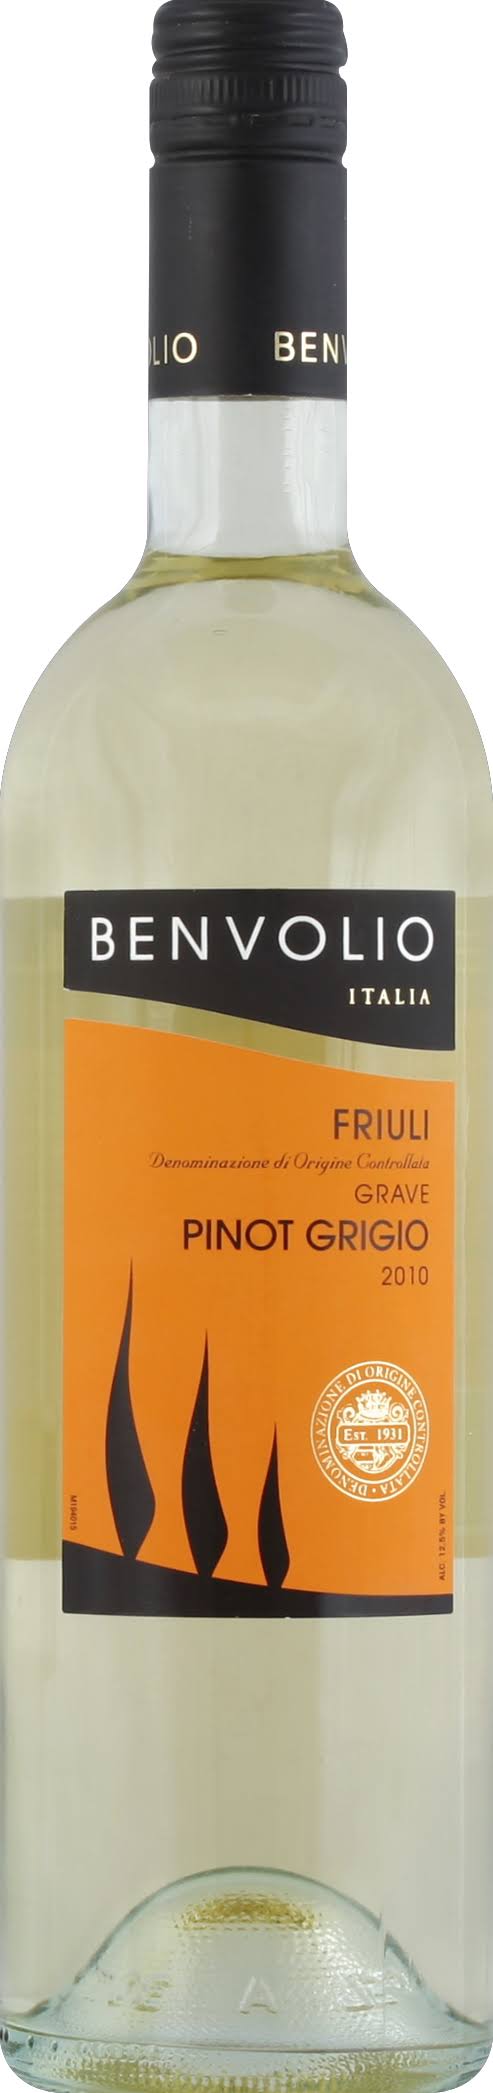 Benvolio Pinot Grigio 2018